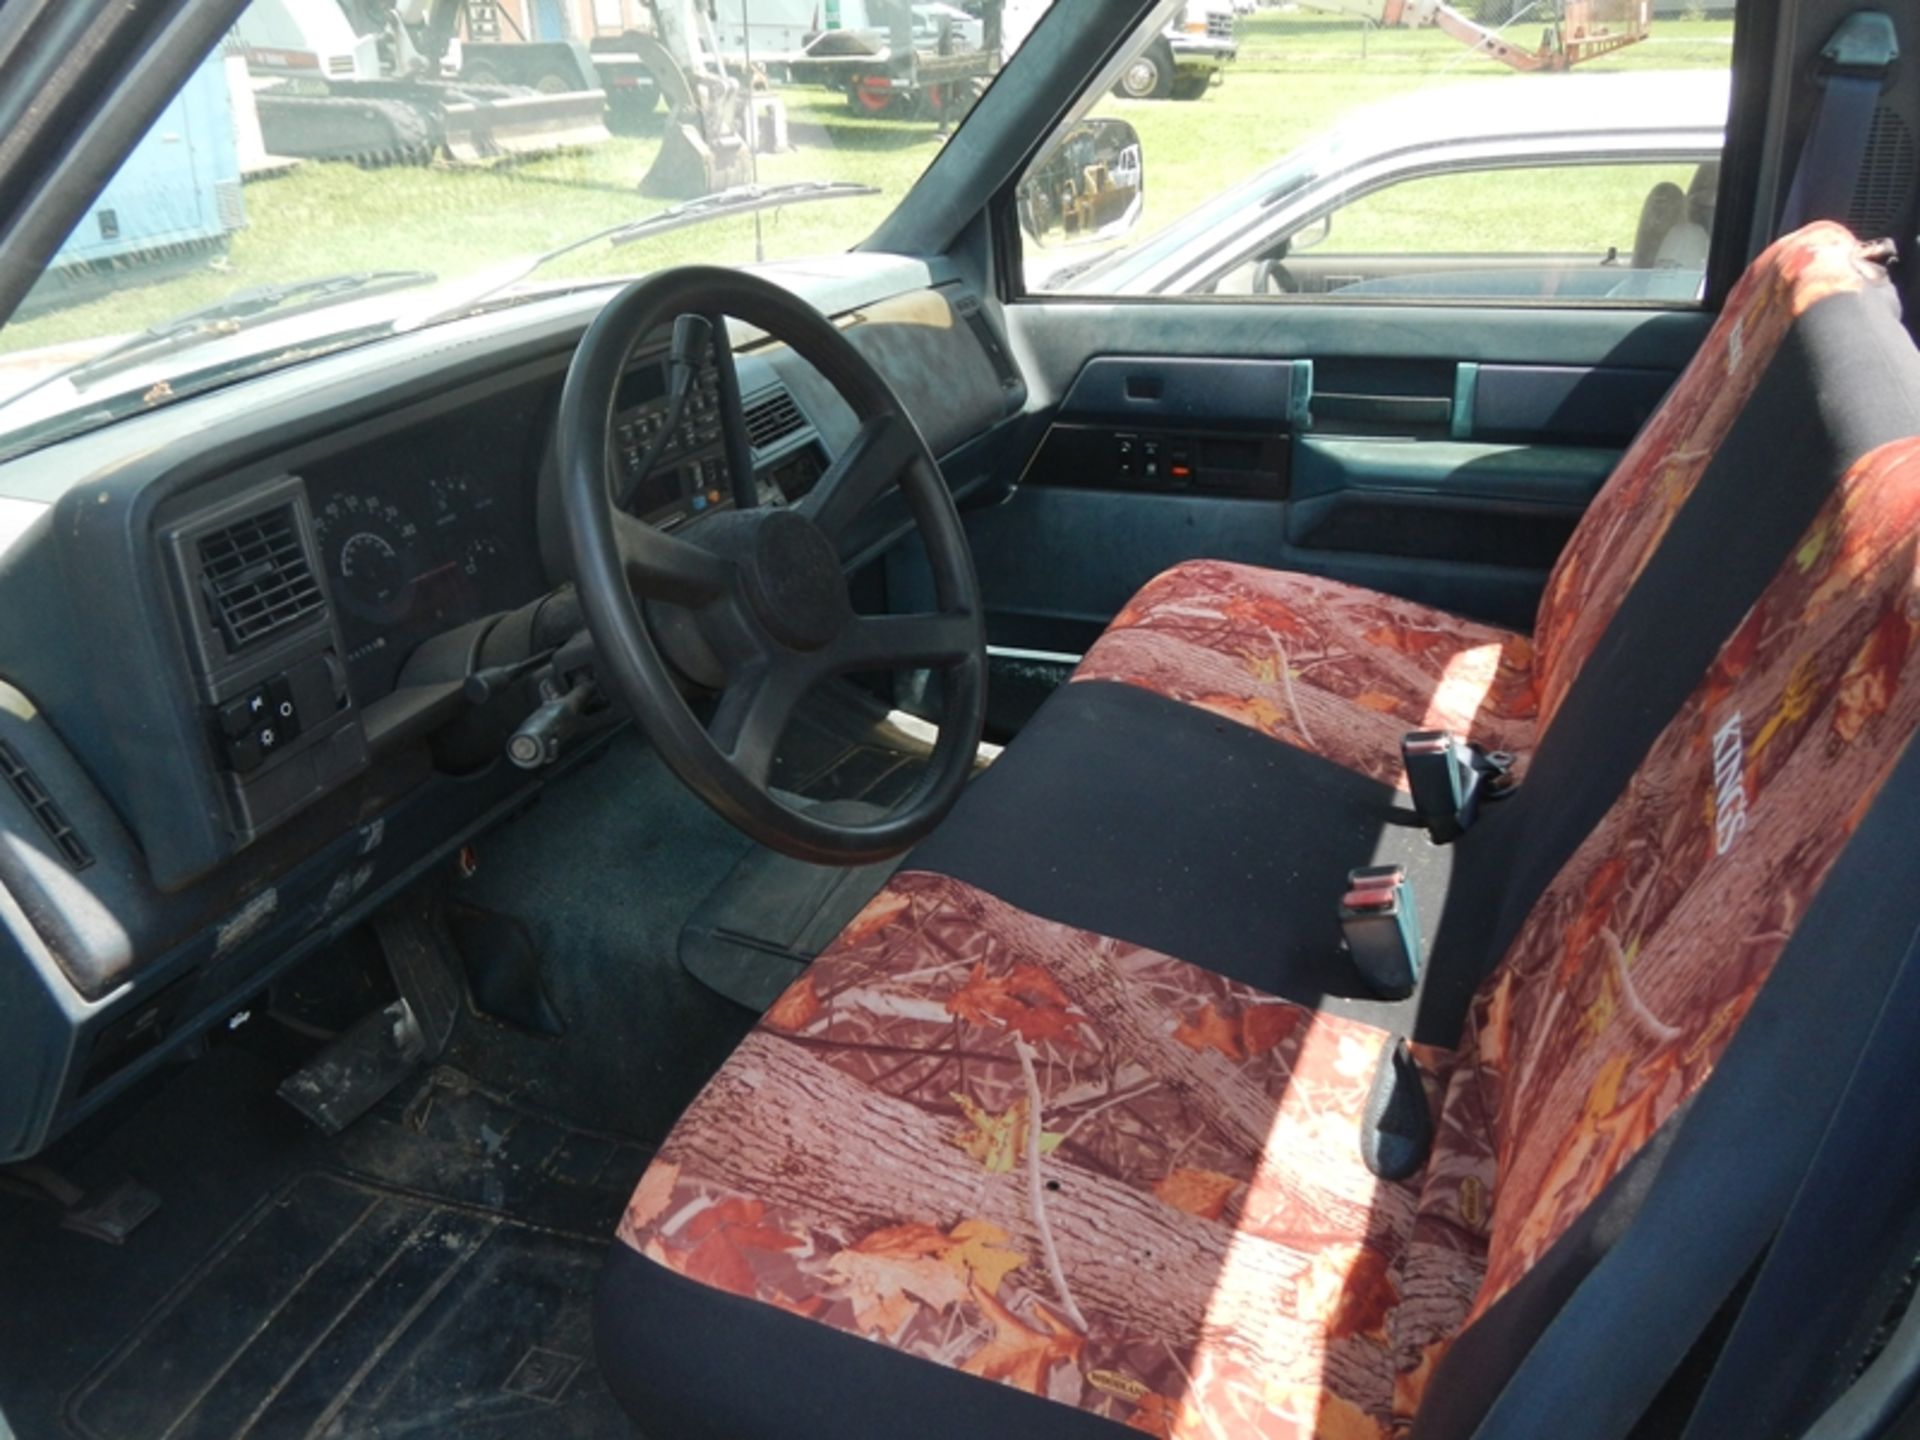 1989 CHEVROLET Silverado 5.7L gas reg cab long bed, VIN 2GCDC14K9K1147807 - 204,355 miles - Image 5 of 5